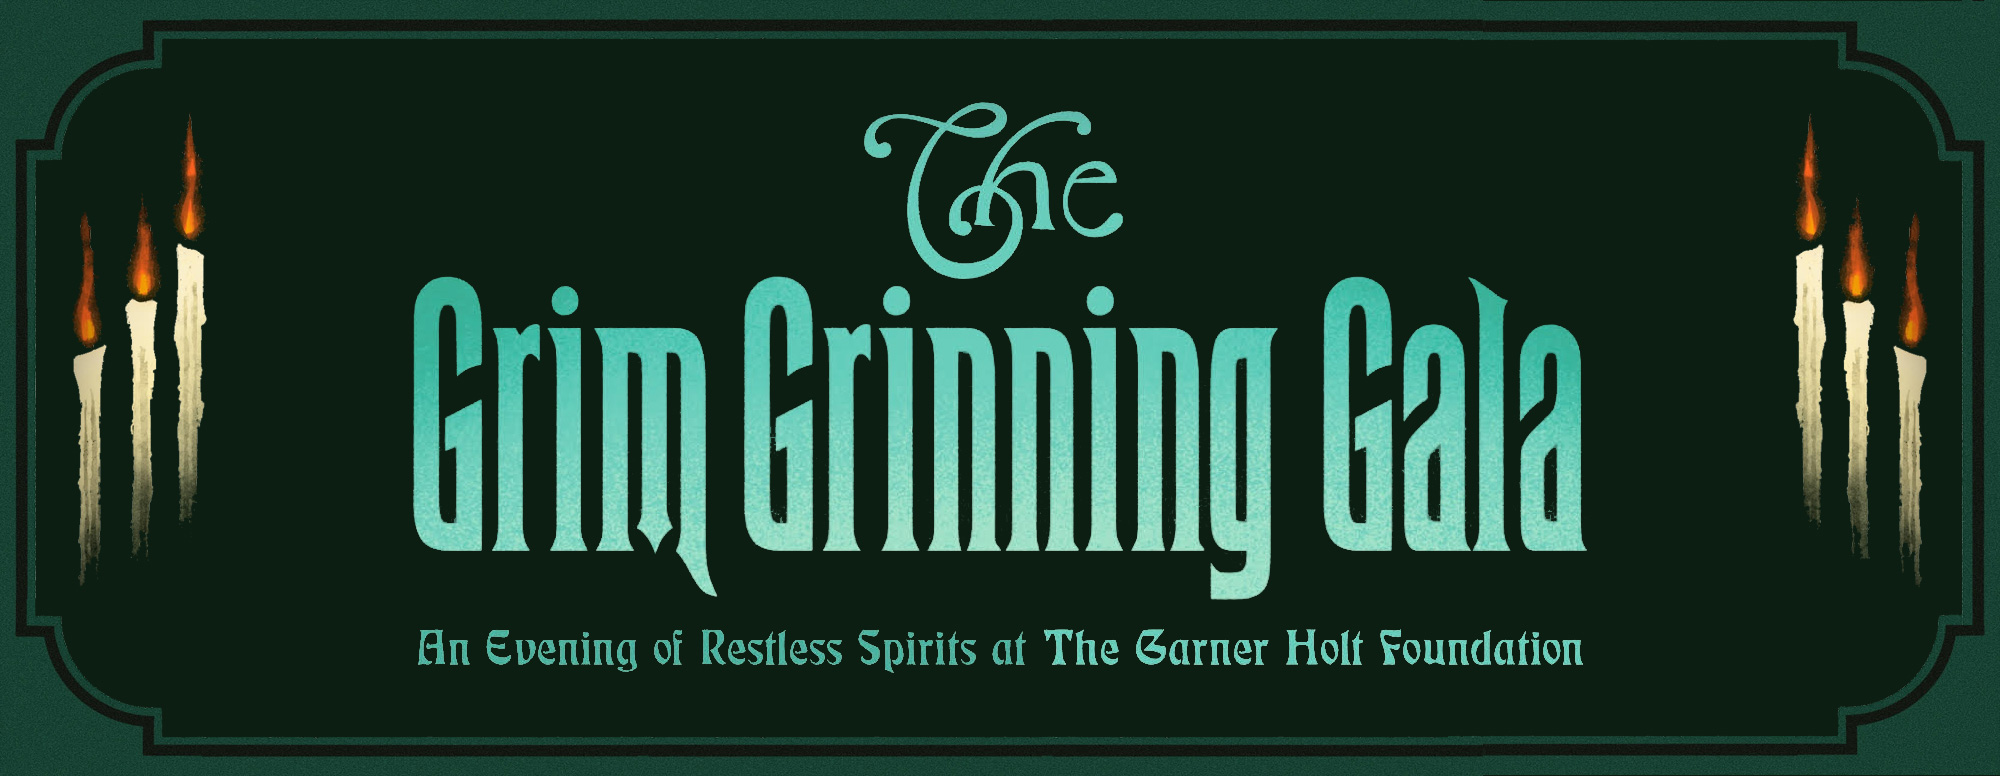 The Grim Grinning Gala